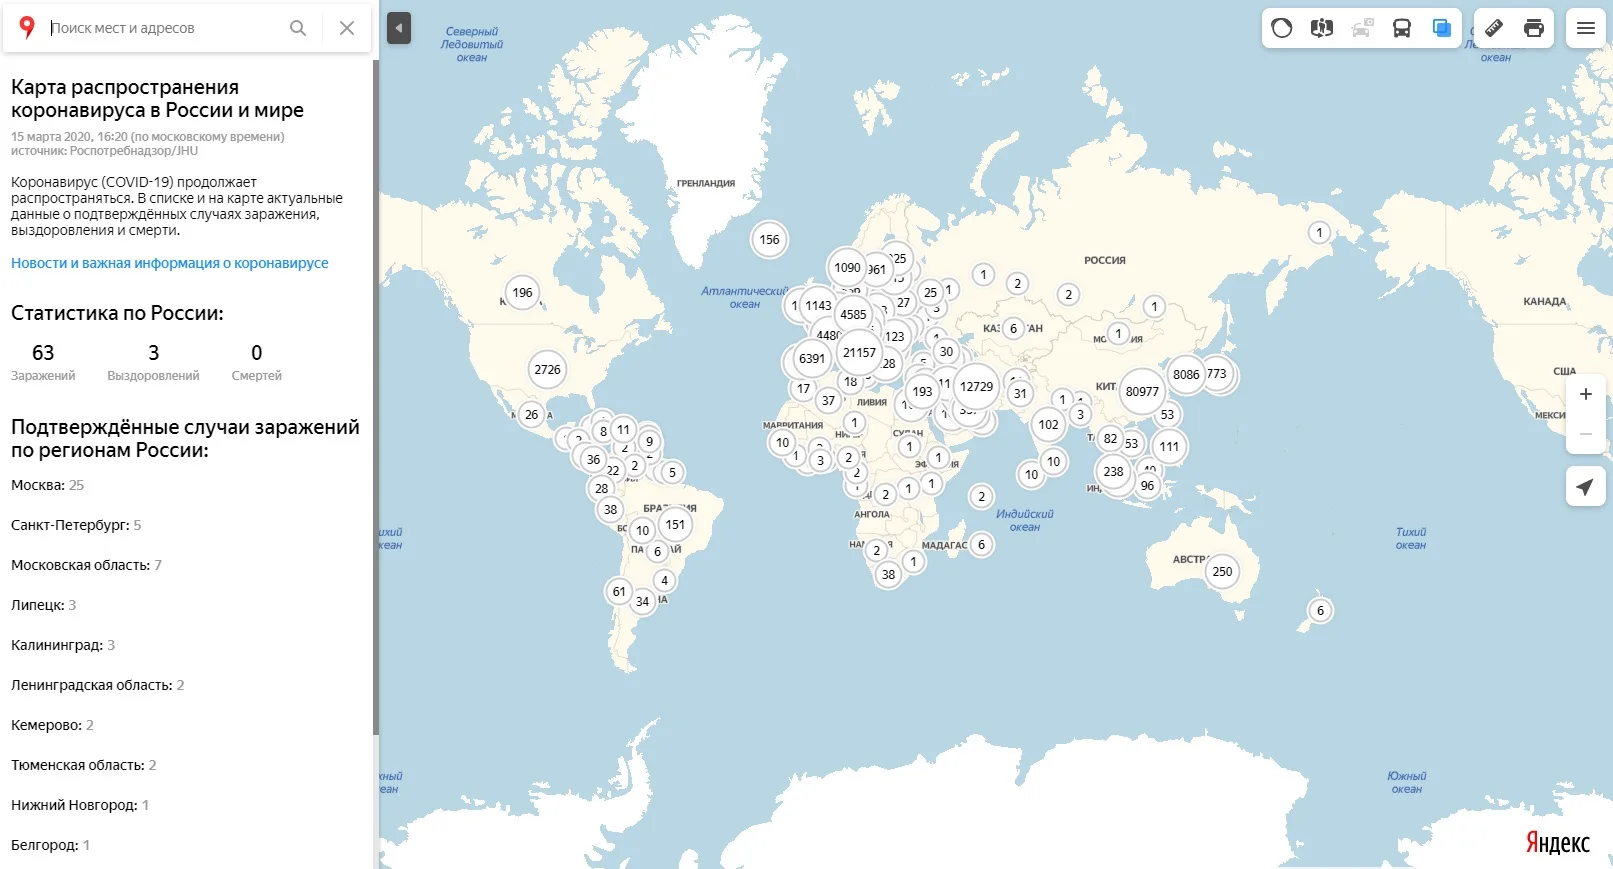 «Яндекс» выпустил онлайн-карту распространения коронавируса - фото 1